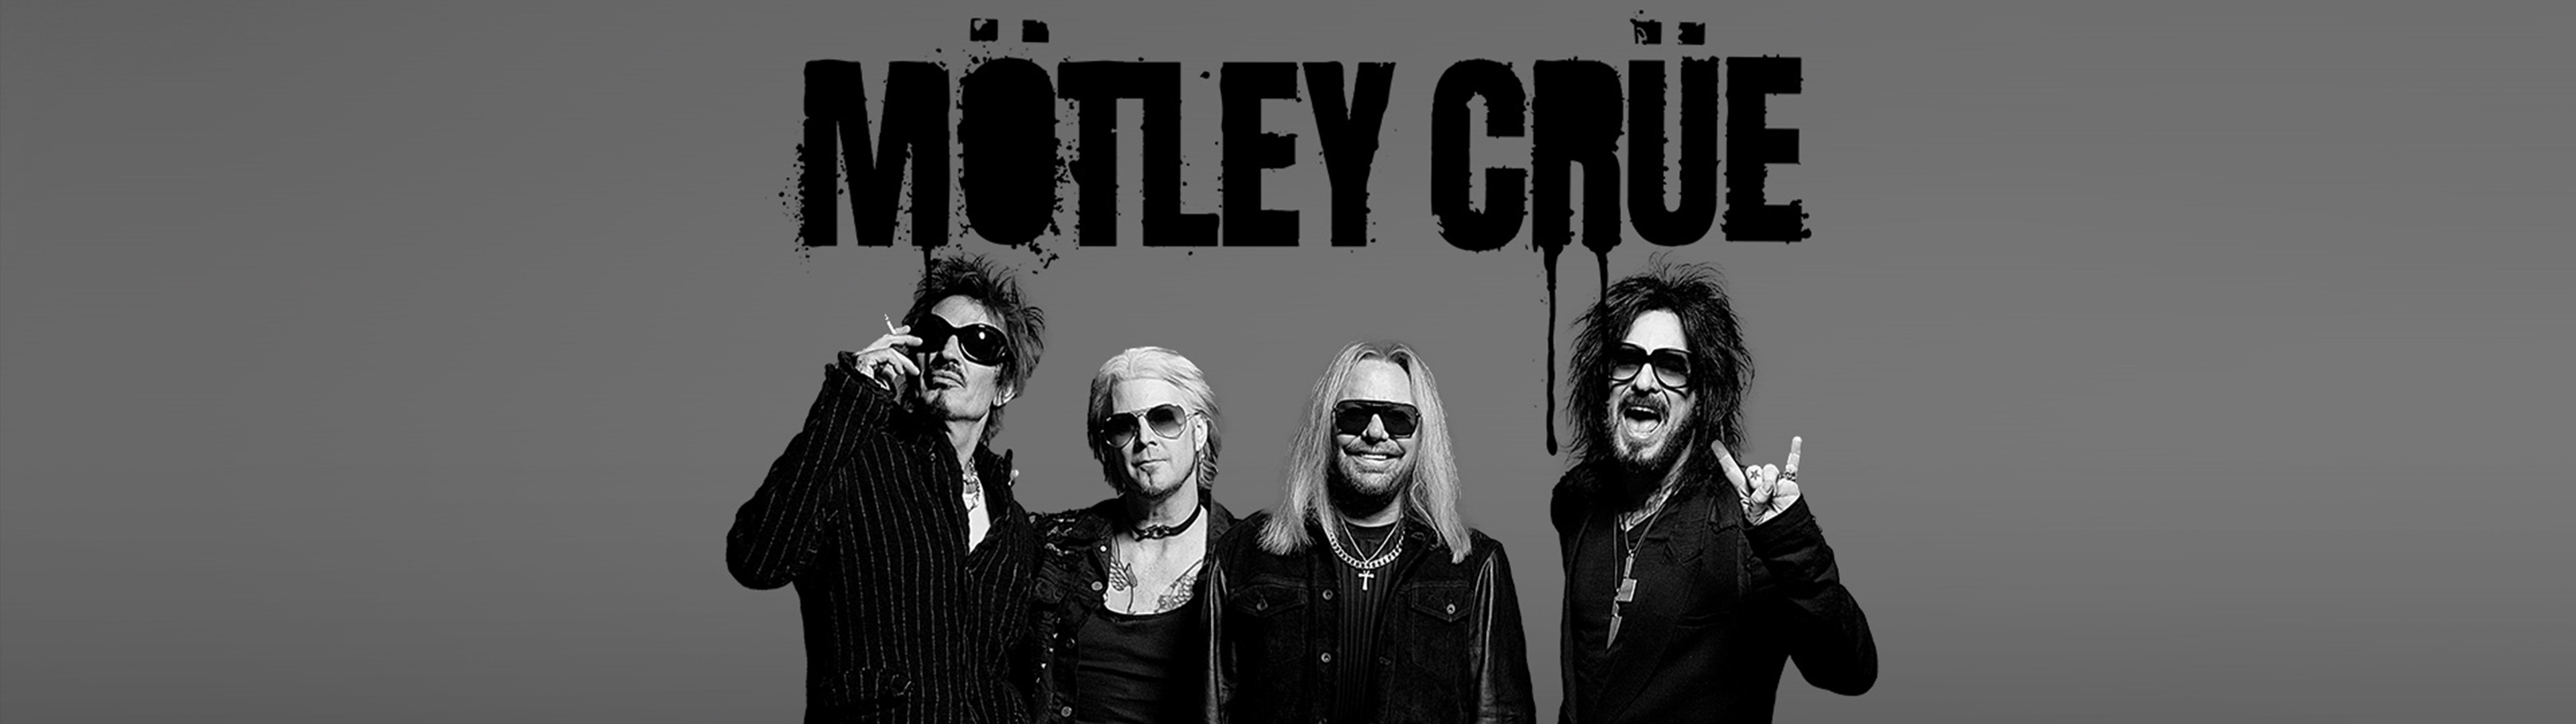 Mötley Crüe | Concert | Hard Rock Atlantic City